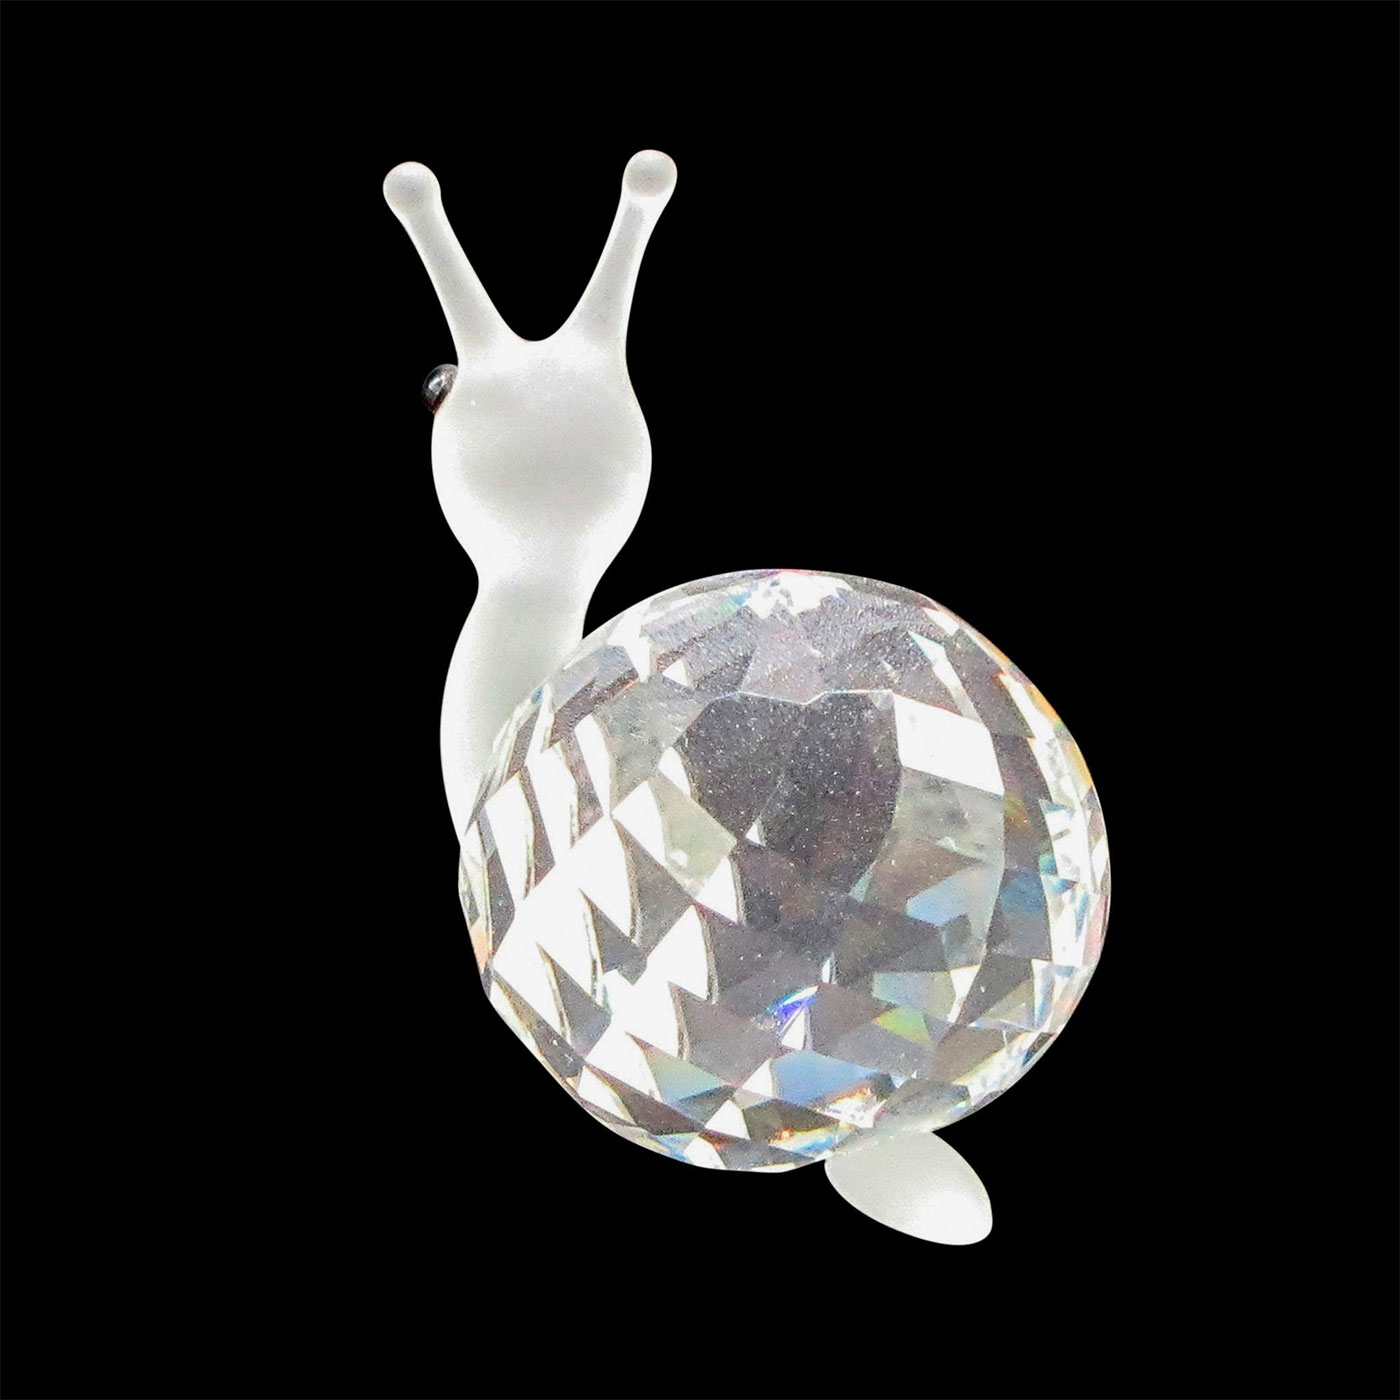 Swarovski Silver Crystal Figurine, Snail - Image 2 of 2